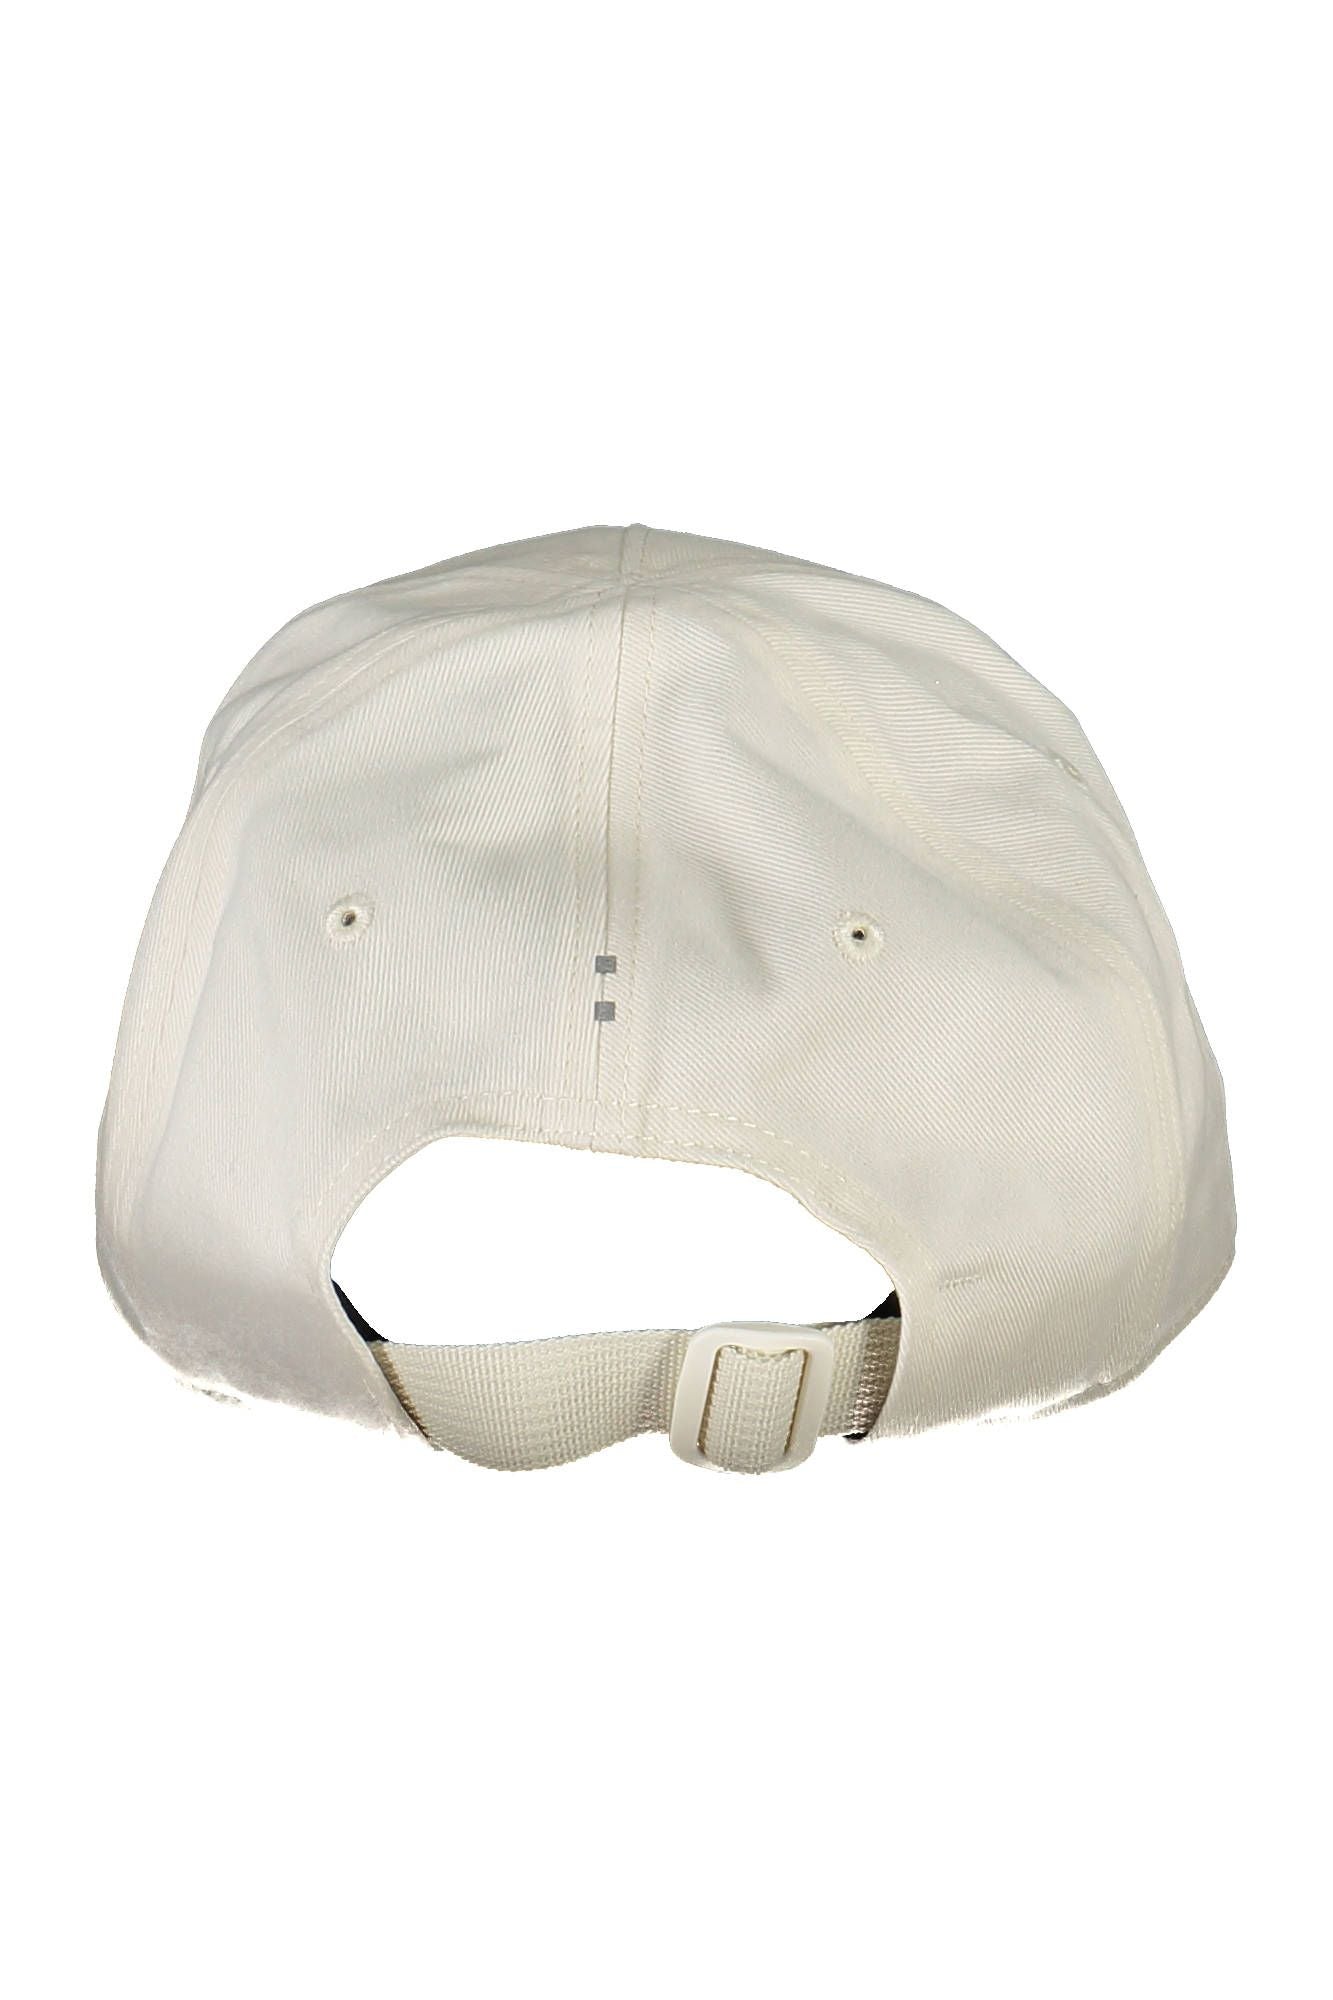 Chic Beige Cotton Cap with Adjustable Visor